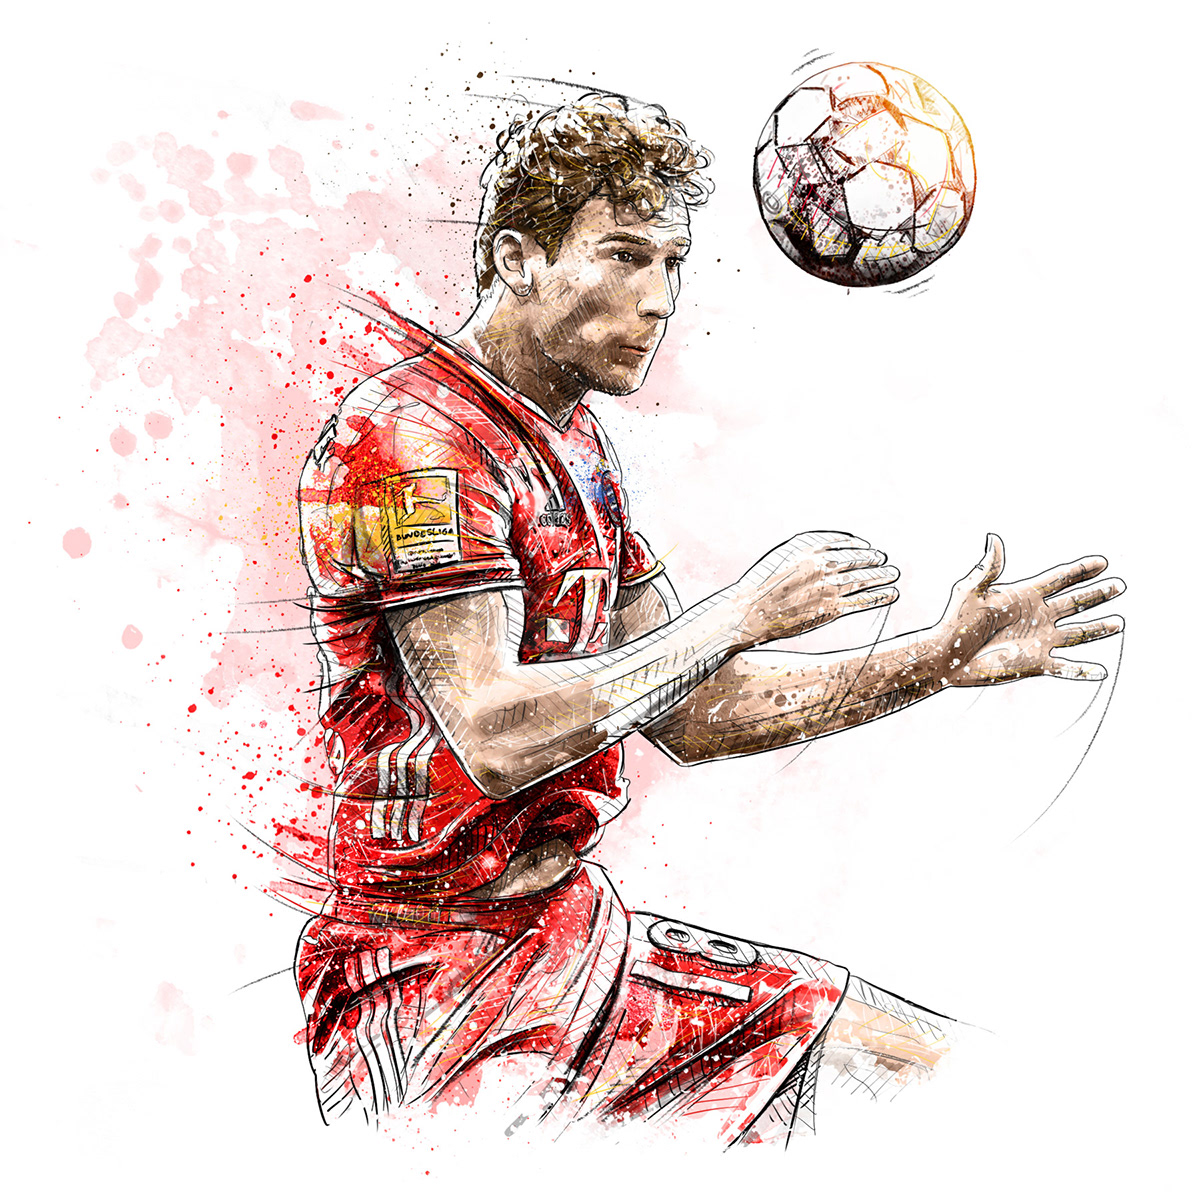 bundesliga champions league Dynamic FC Bayern football player portrait soccer sports watercolor